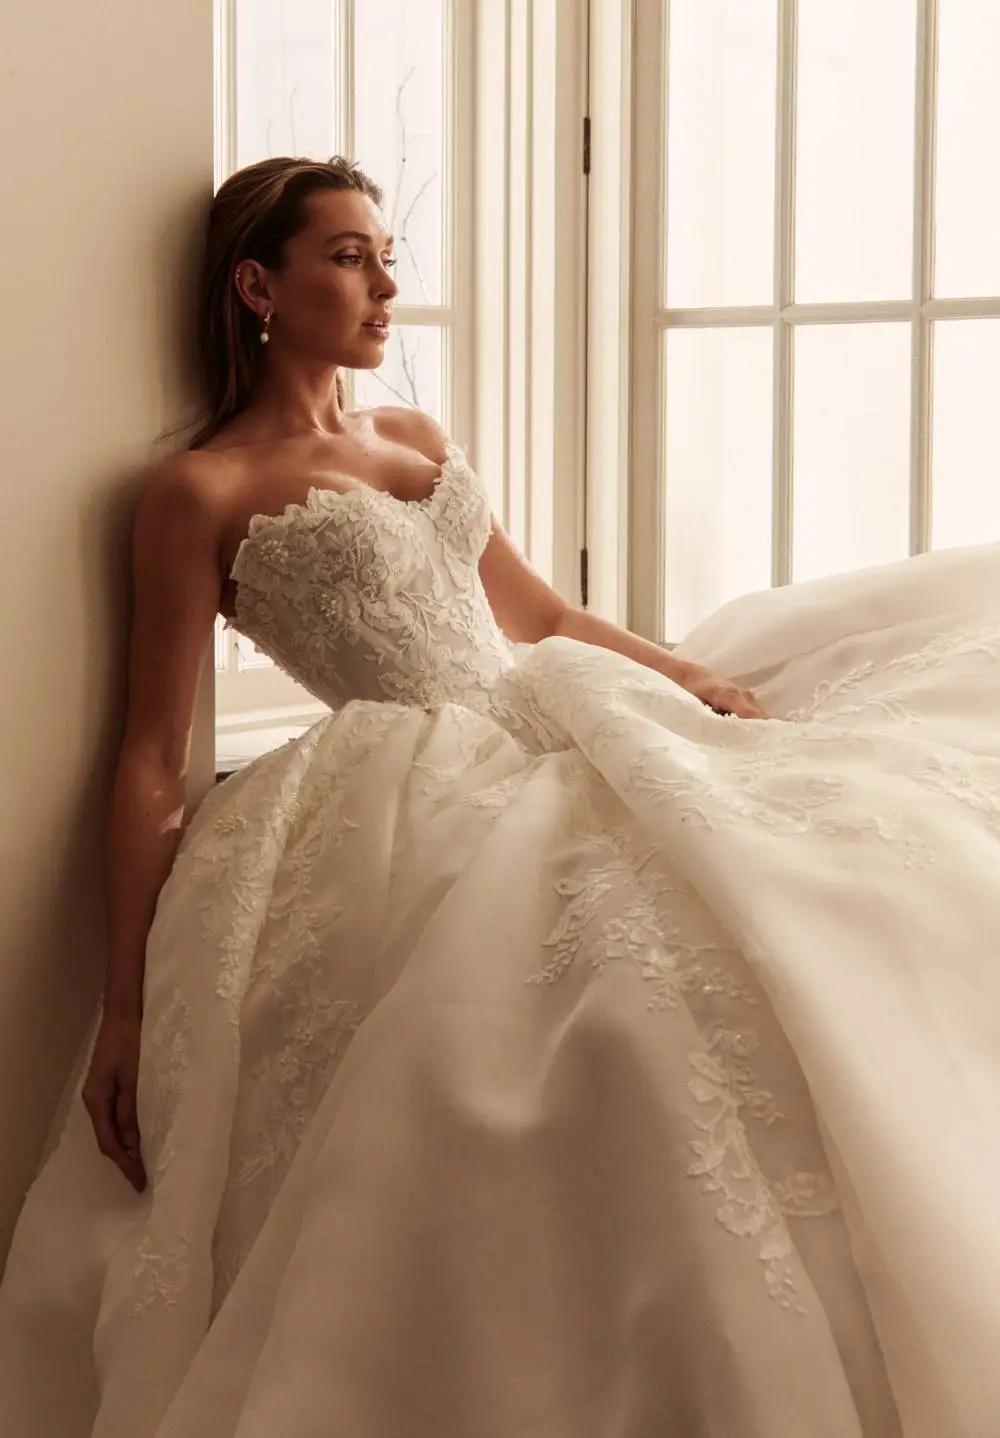 Model wearing a white dress by Leah Da Gloria